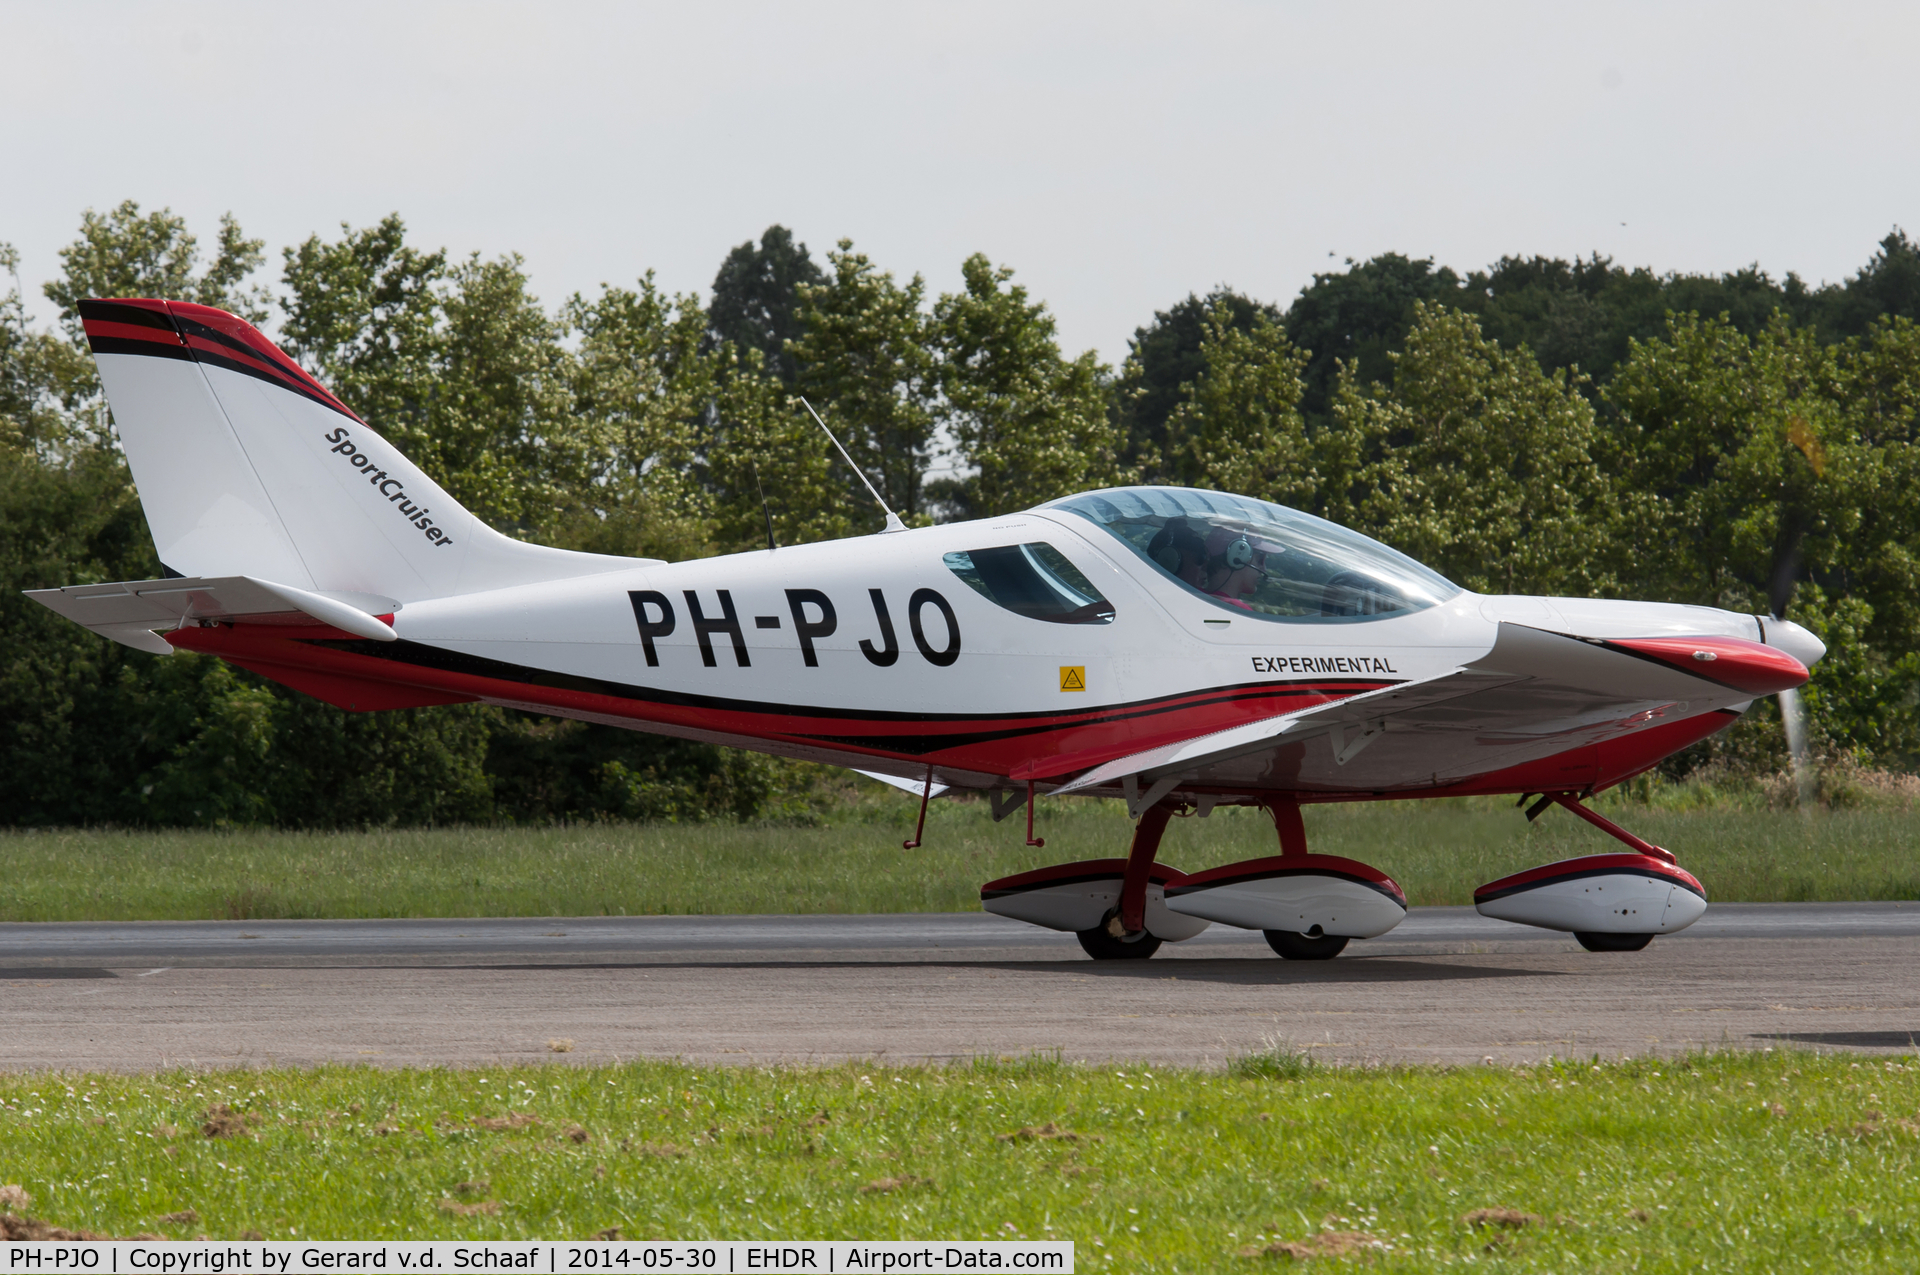 PH-PJO, 2010 Czech SportCruiser Piper Sport C/N P1001033, Schiphol, July 2014